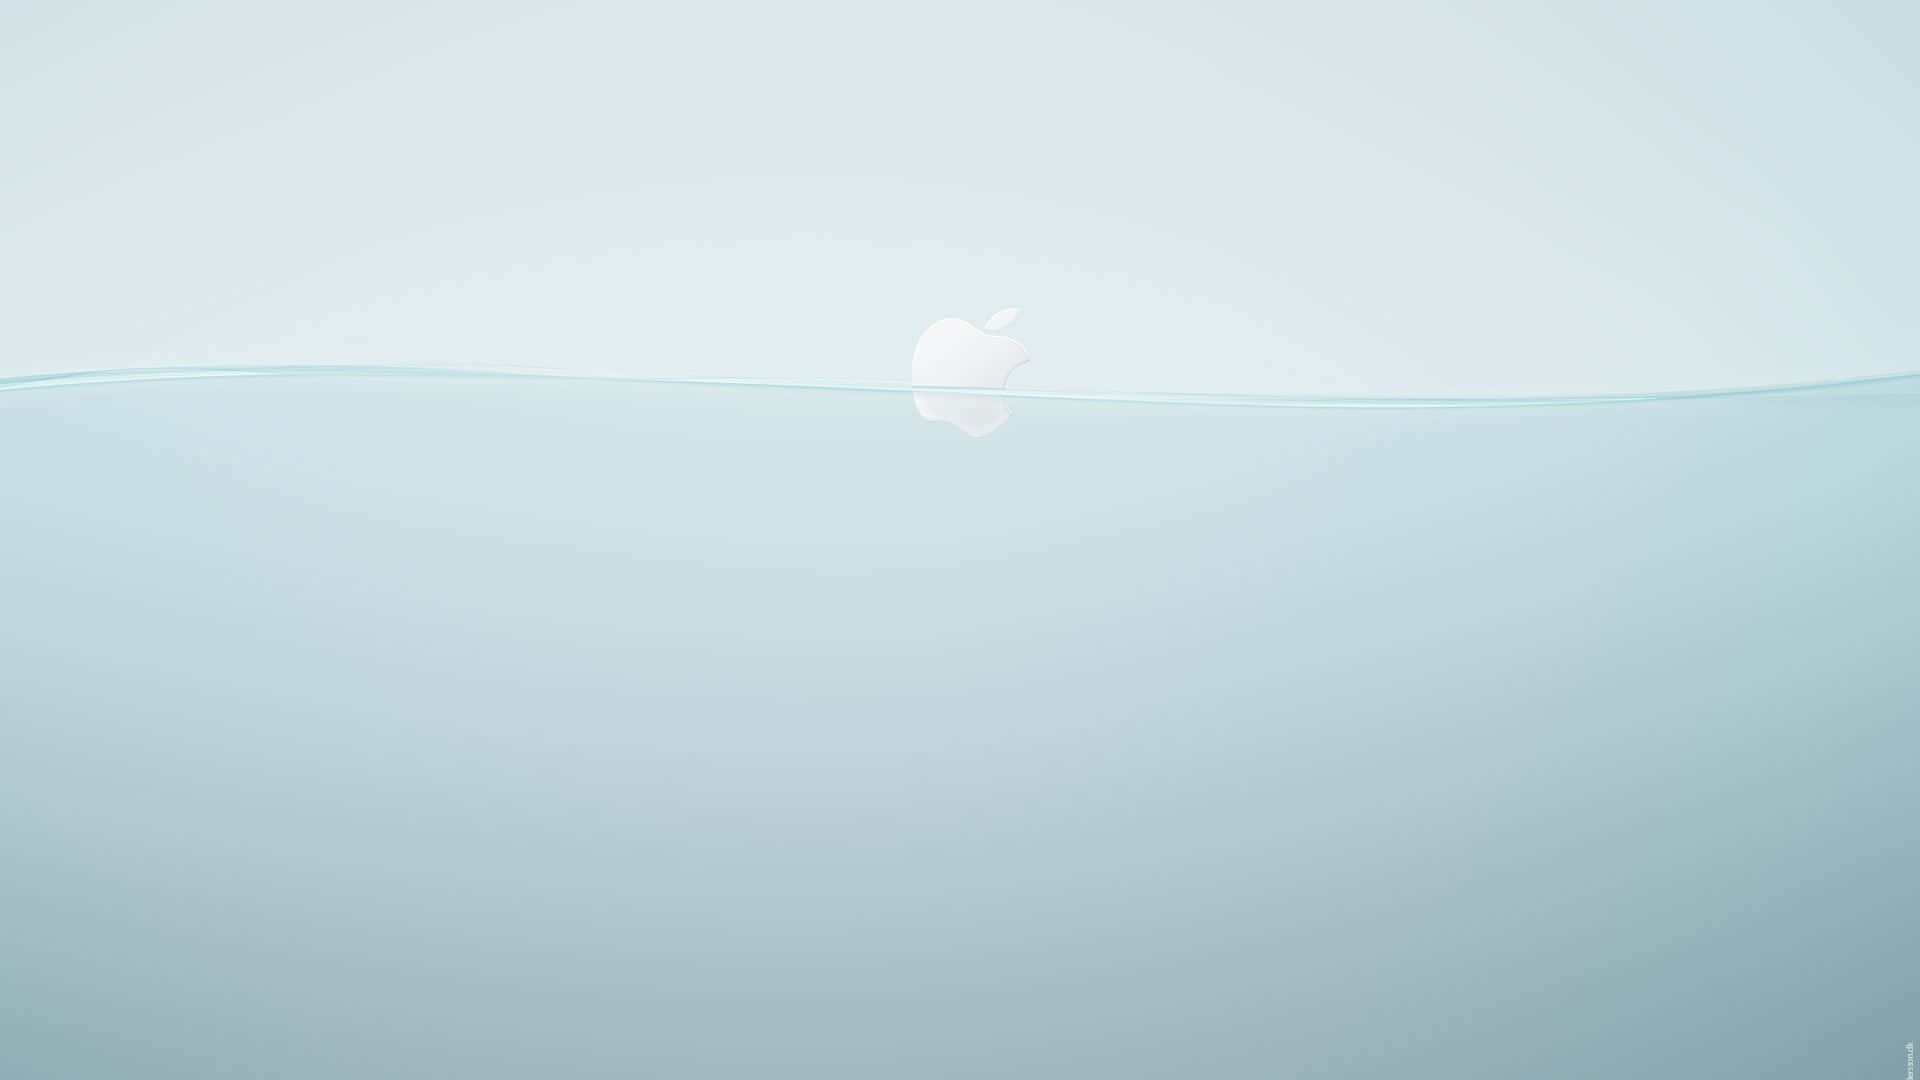 Logotipode Apple Flotando En El Agua